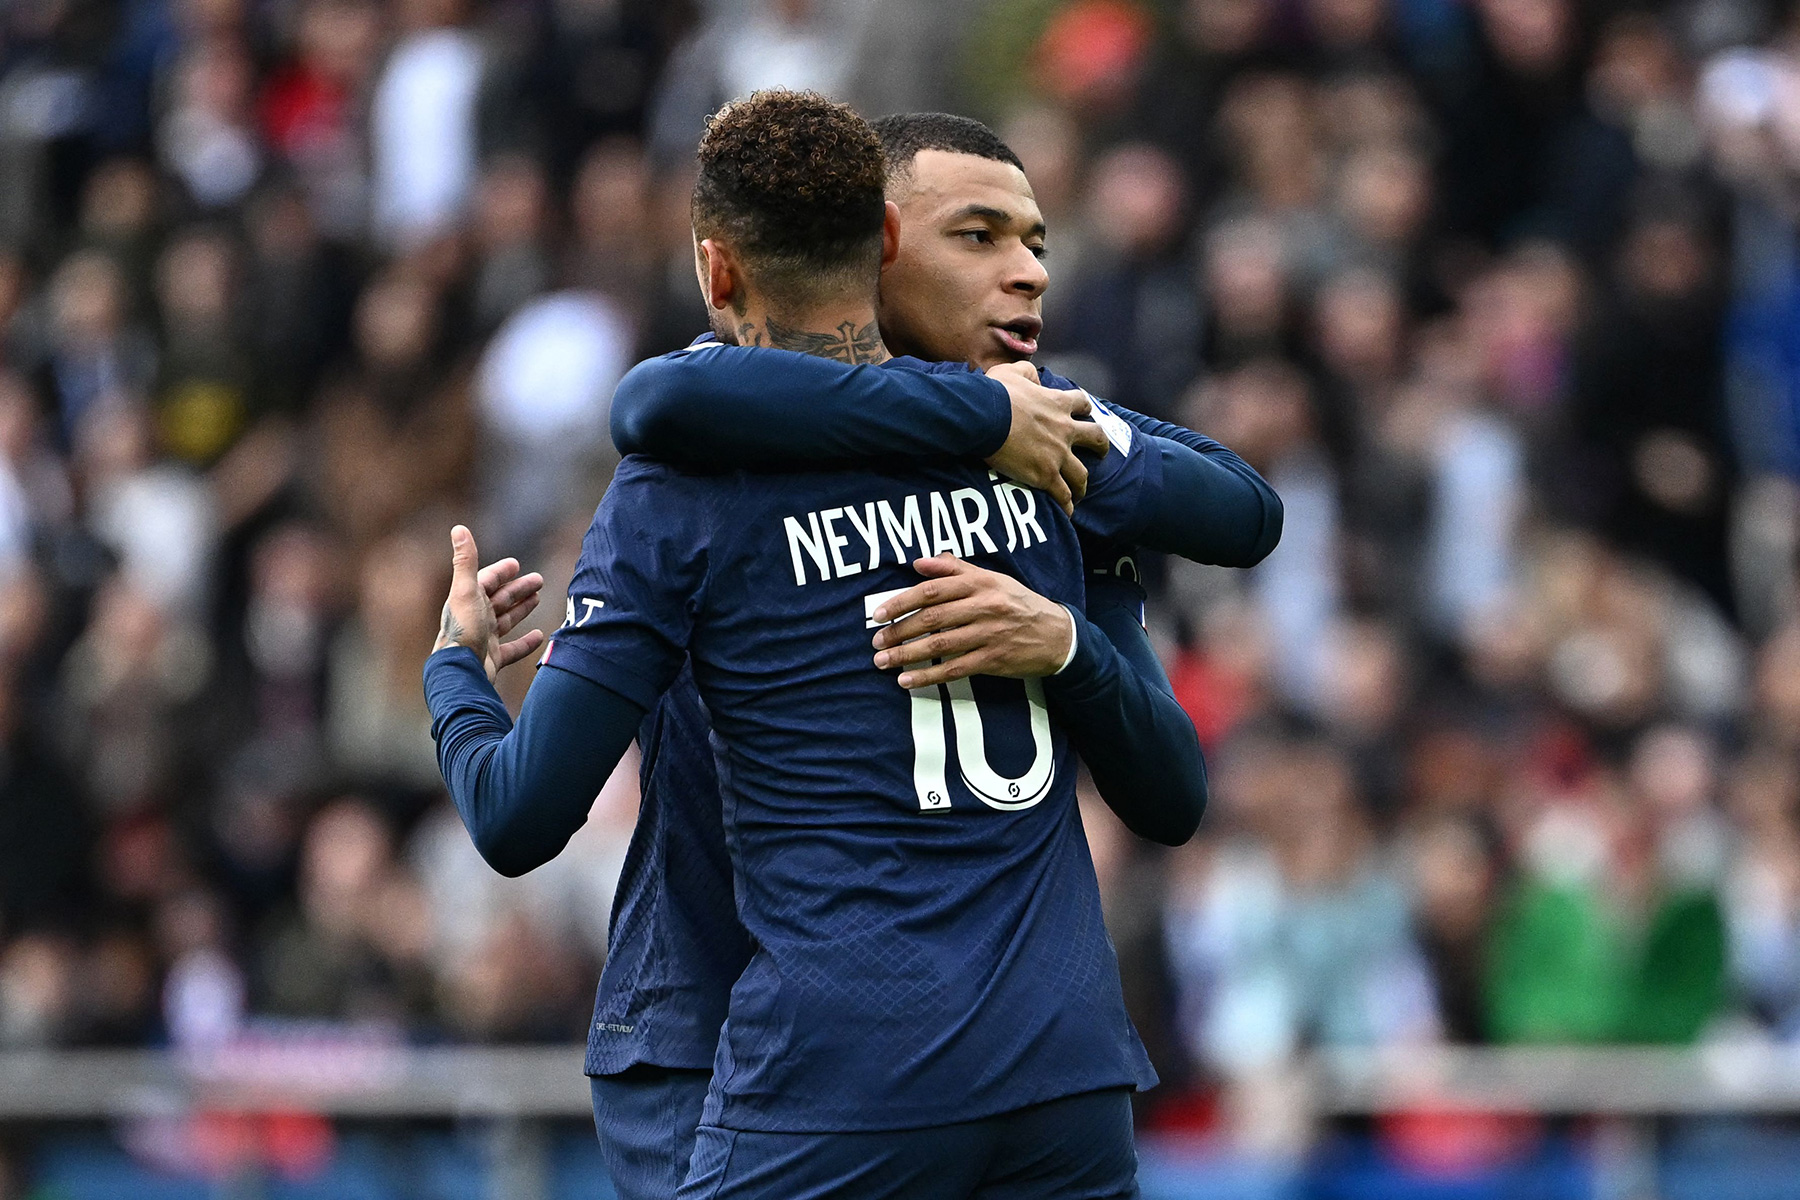 Neymar, Mbappé No Longer Follow Each Other on Instagram